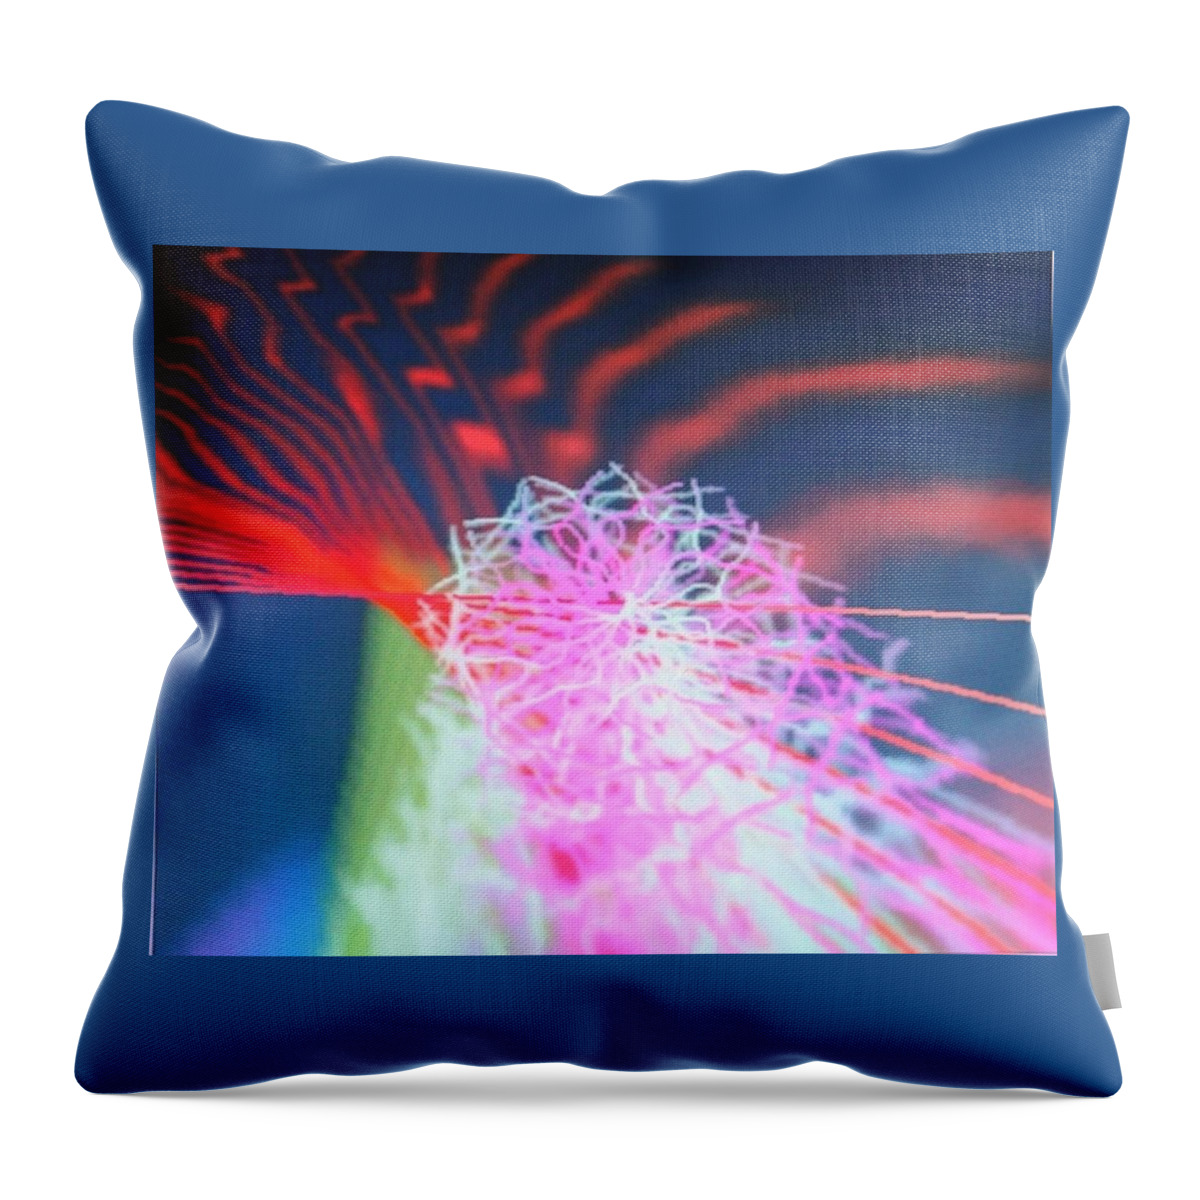 Digital Art Throw Pillow featuring the digital art Img9999 by Ralph Root